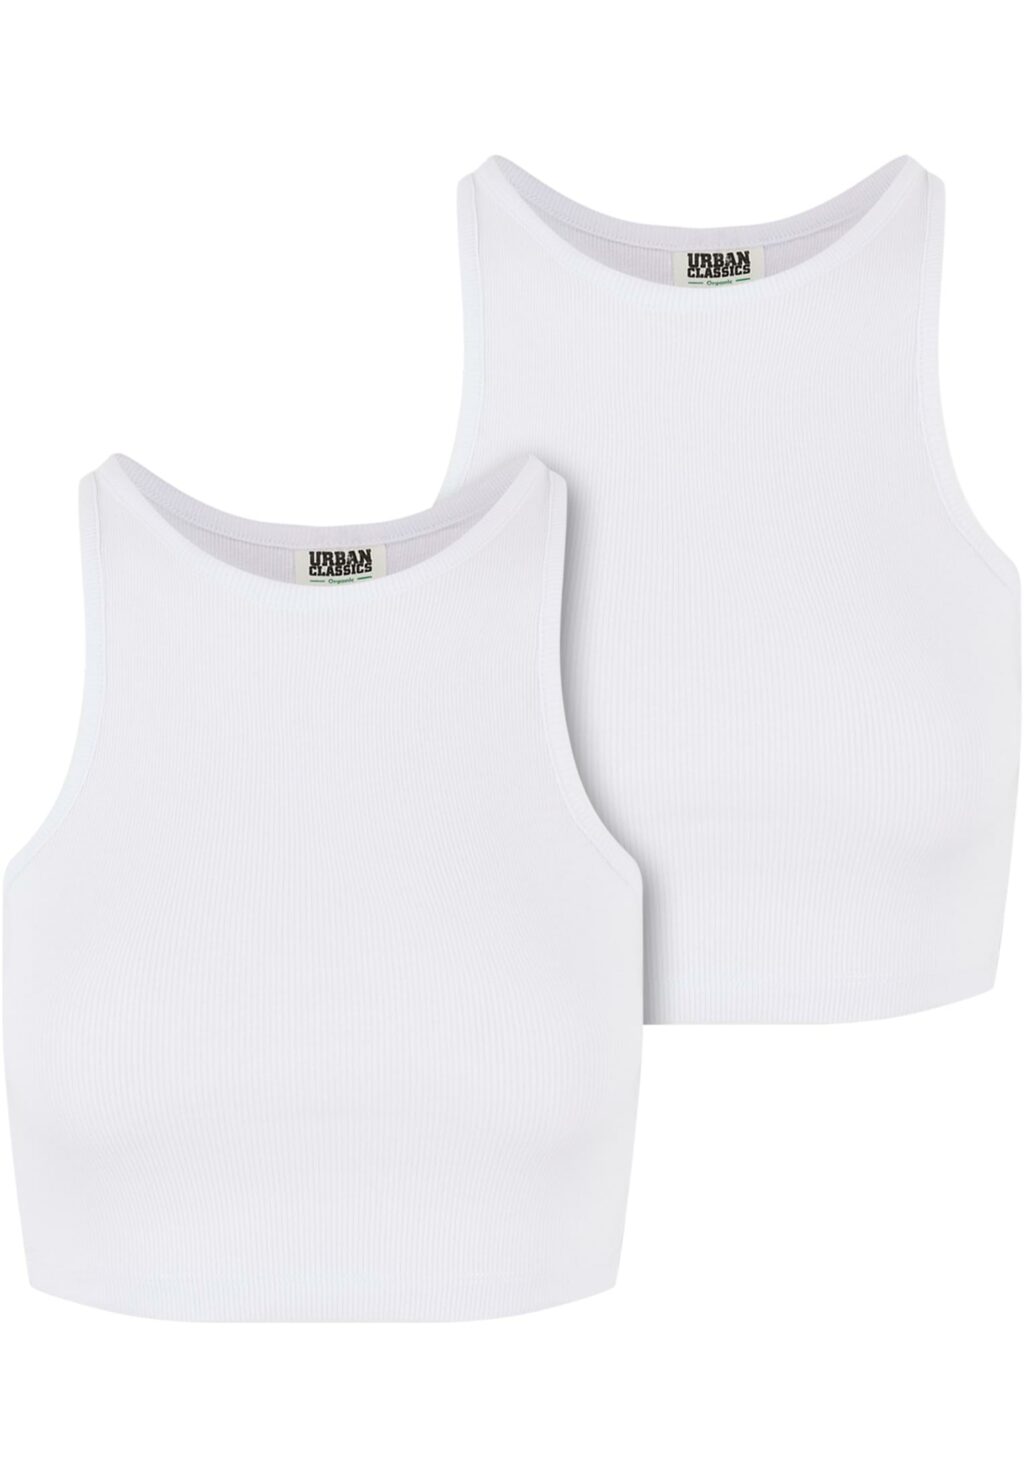 Urban Classics Ladies Organic Cropped Rib Top 2-Pack white/white TB6185A